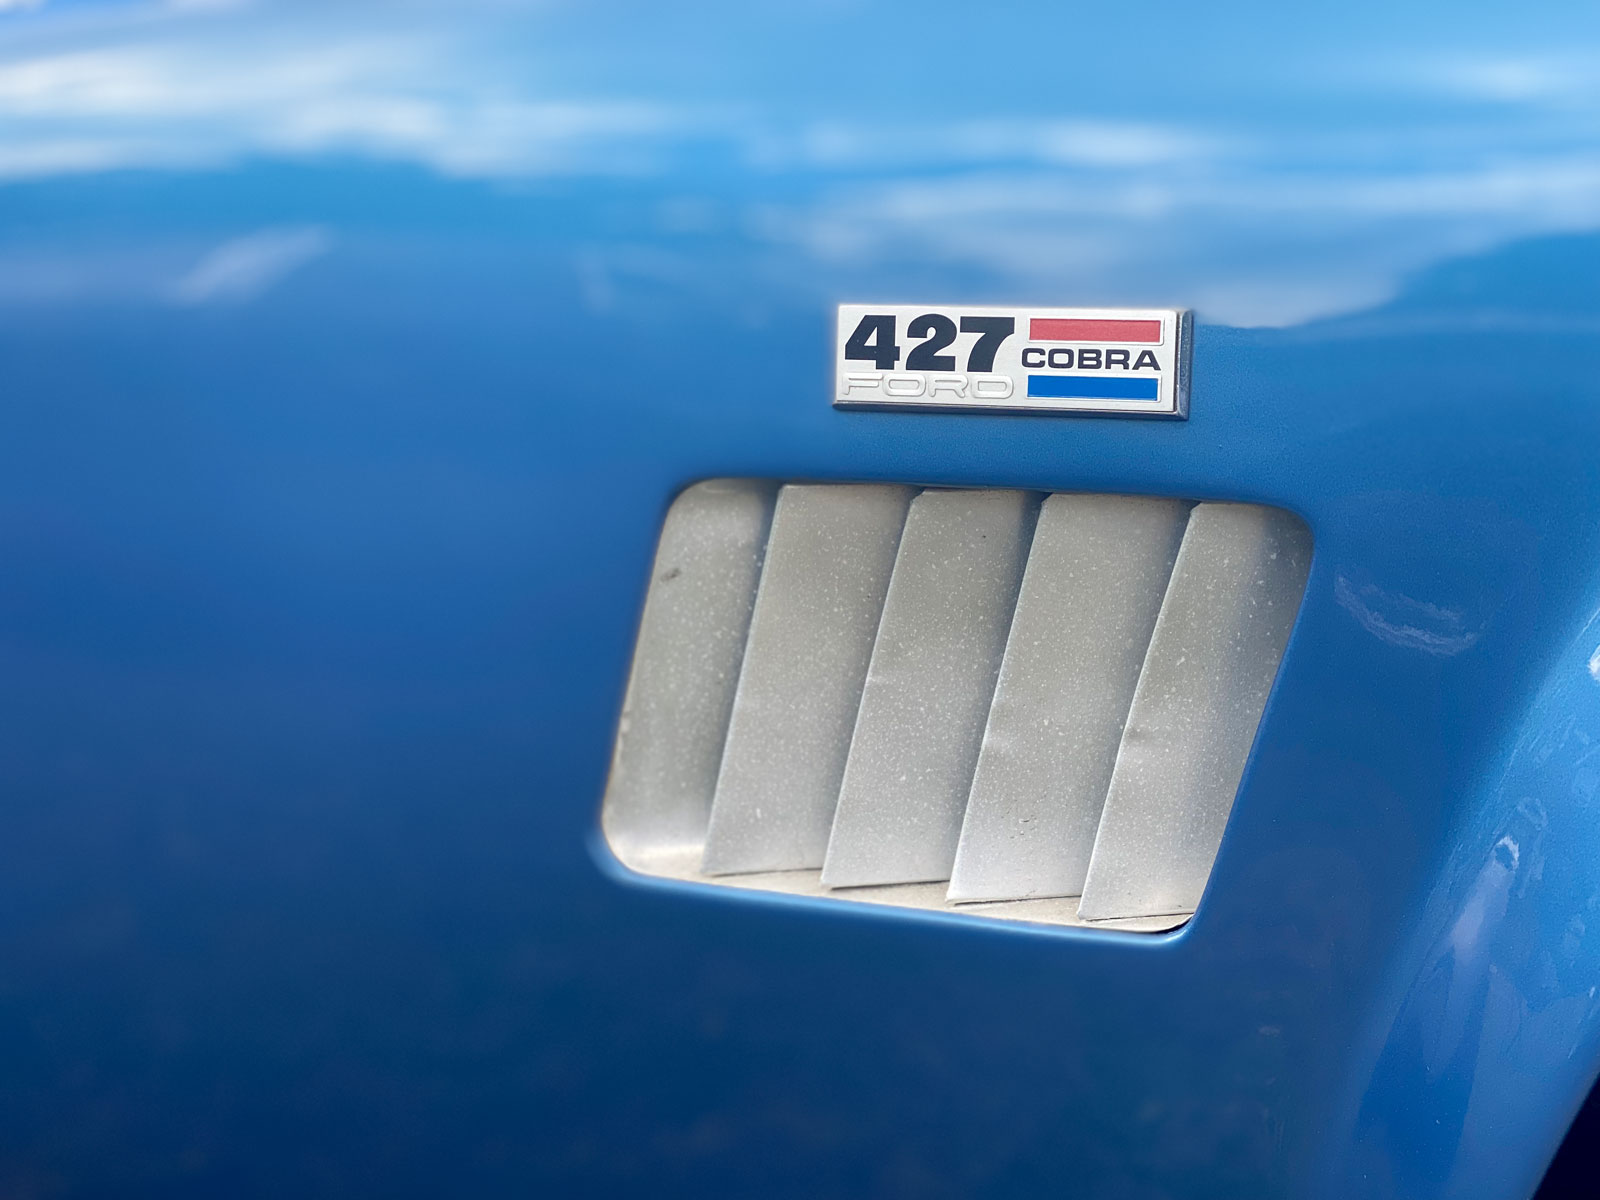 427 Ford Cobra badge on blue AC Shelby Cobra